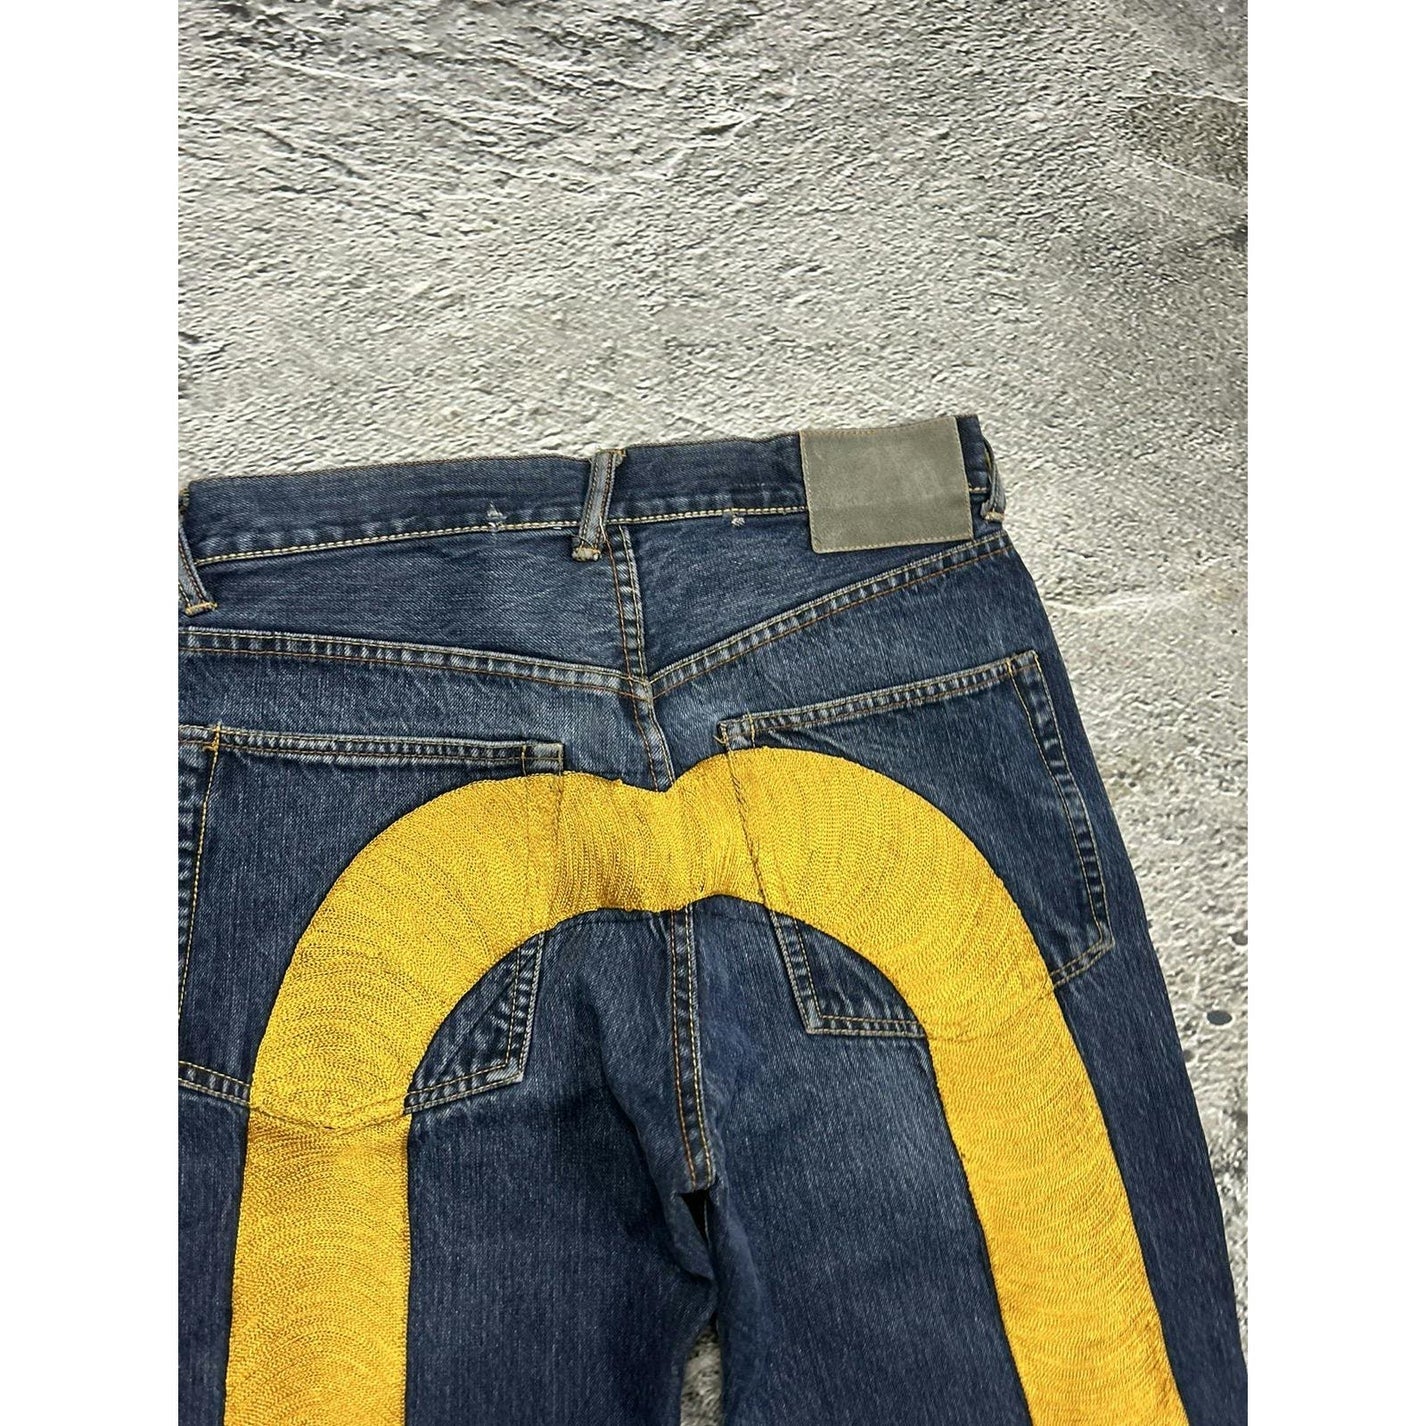 Evisu Jeans Daicock Big Logo Embroidery Yellow Vinntage Denim